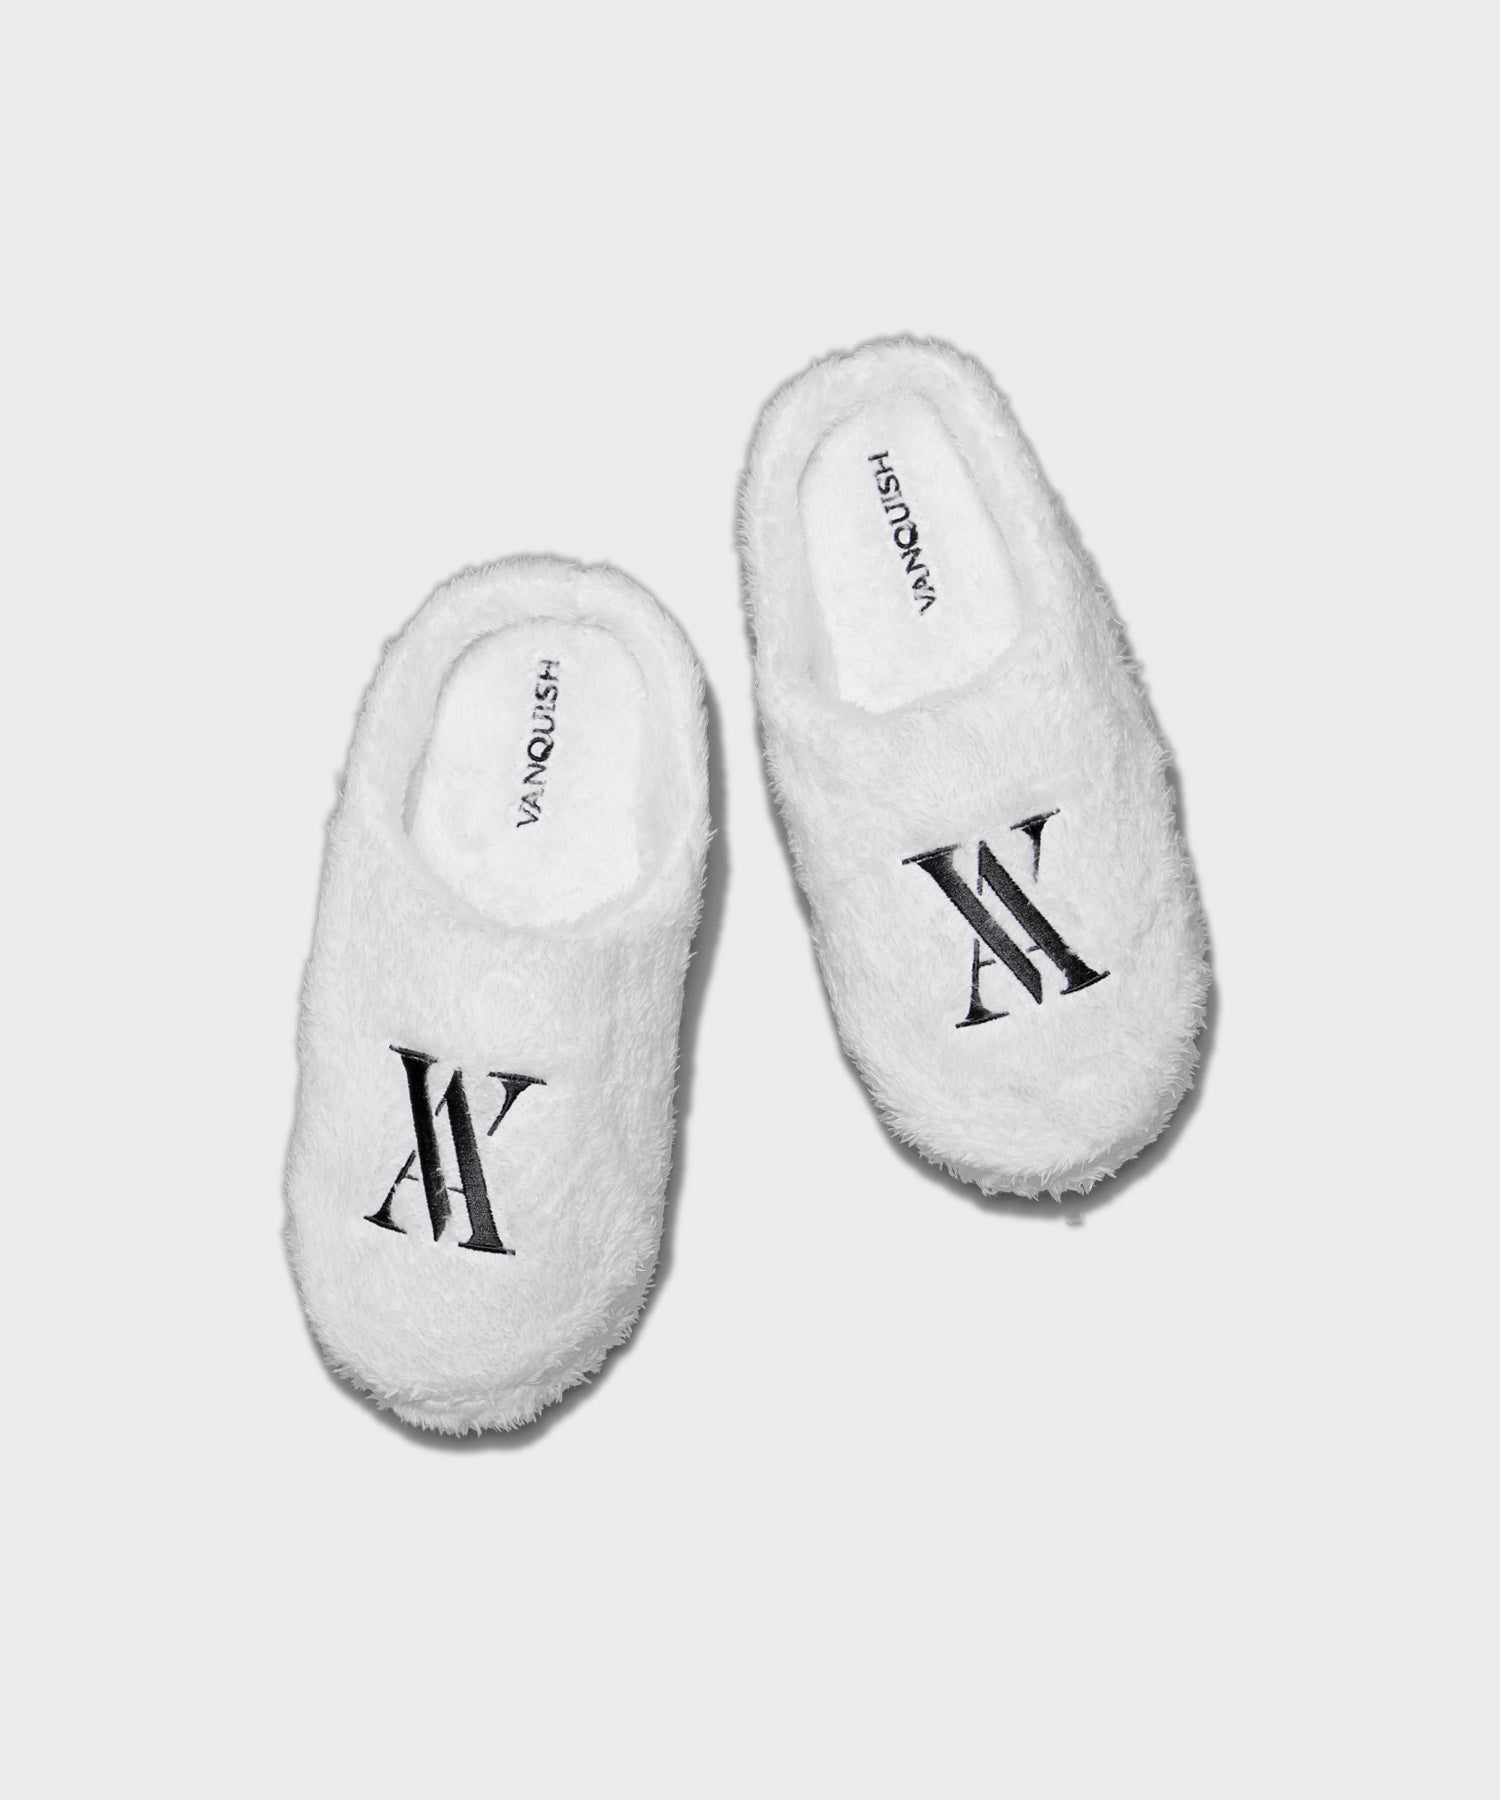 VA Embroiderg fluffy slippers[VYA004]